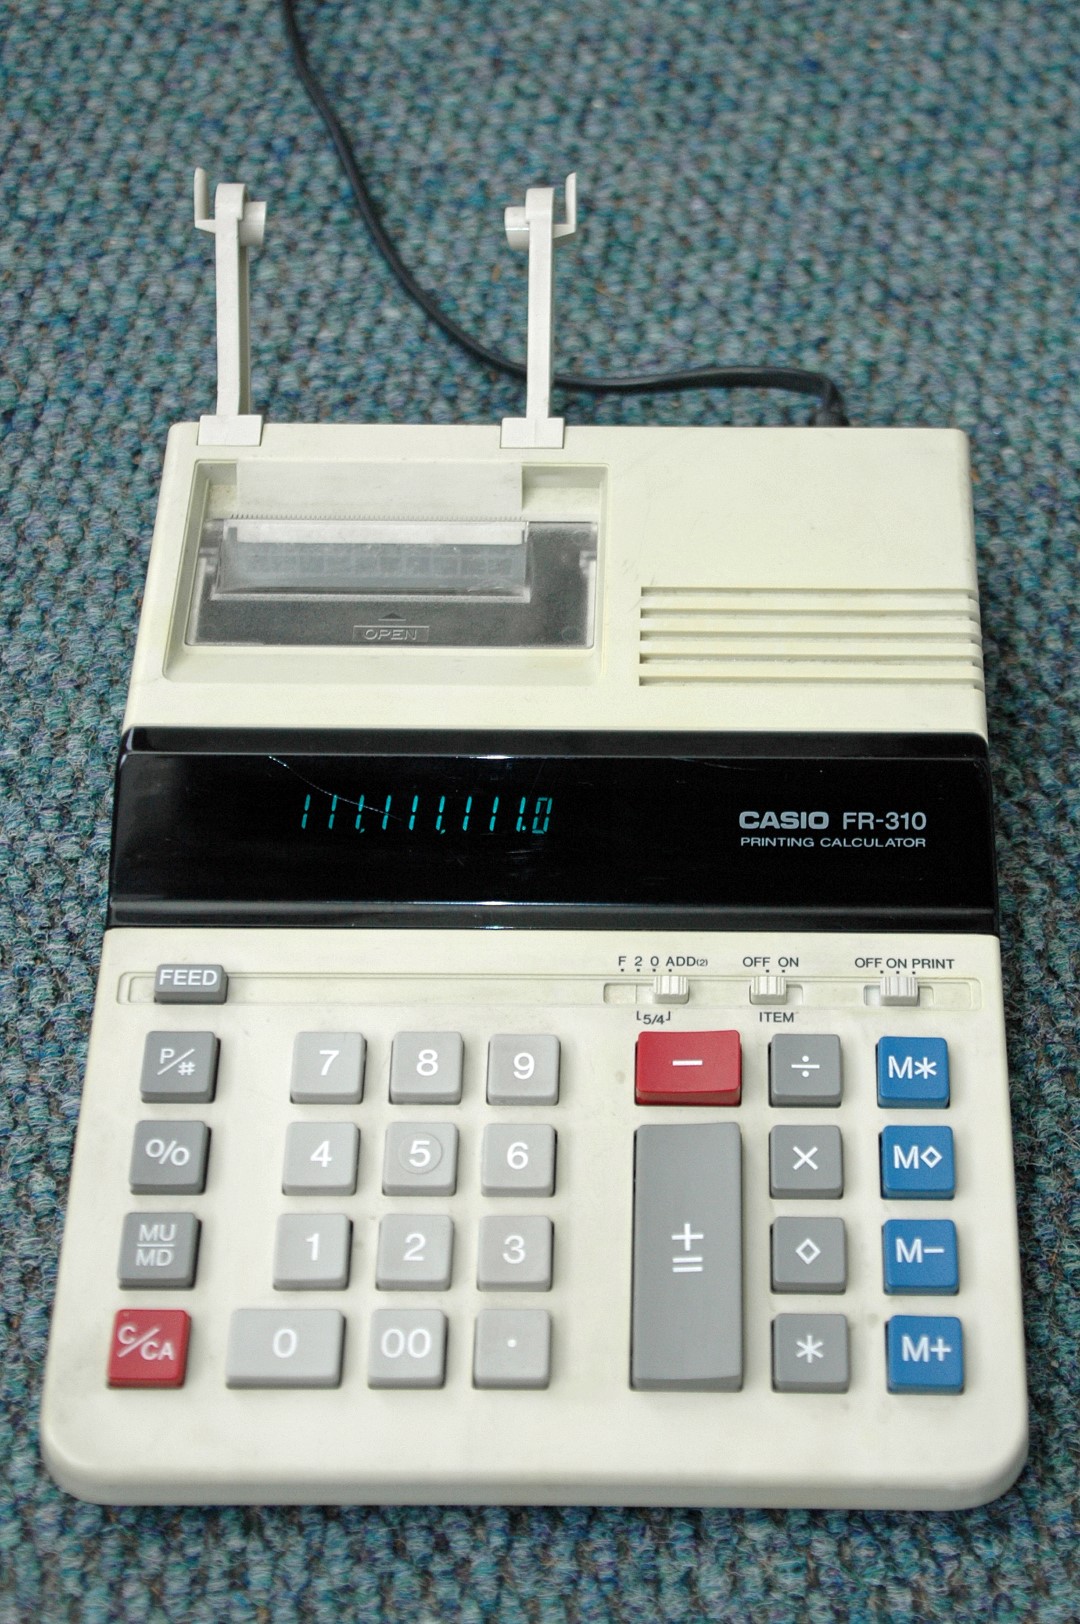 CASIO FR-310 printing calculator